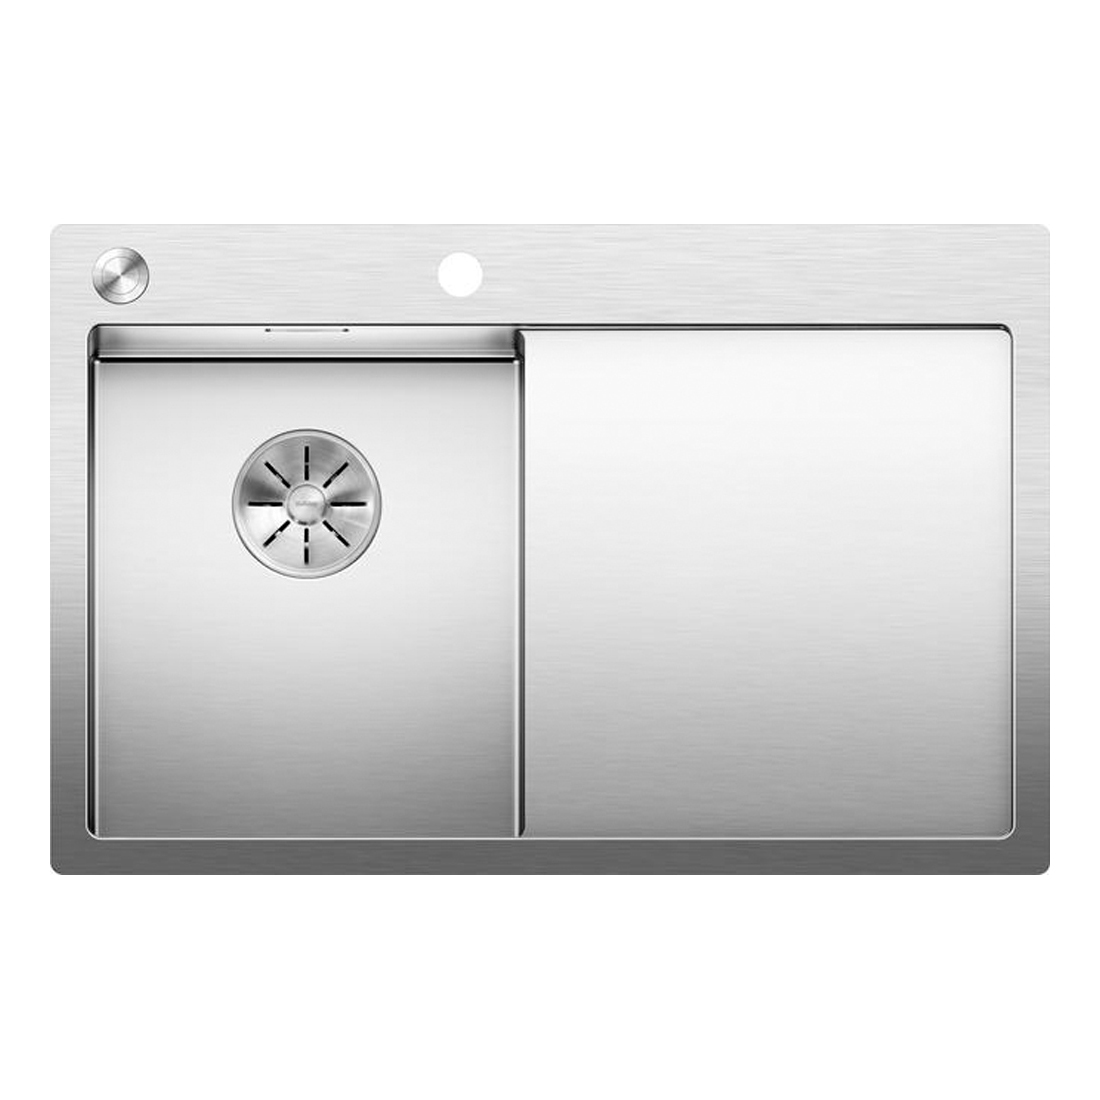 Кухонная мойка Blanco Claron 4S-IF/А L зеркальная полировка кухонная мойка blanco zerox 700 u зеркальная полировка